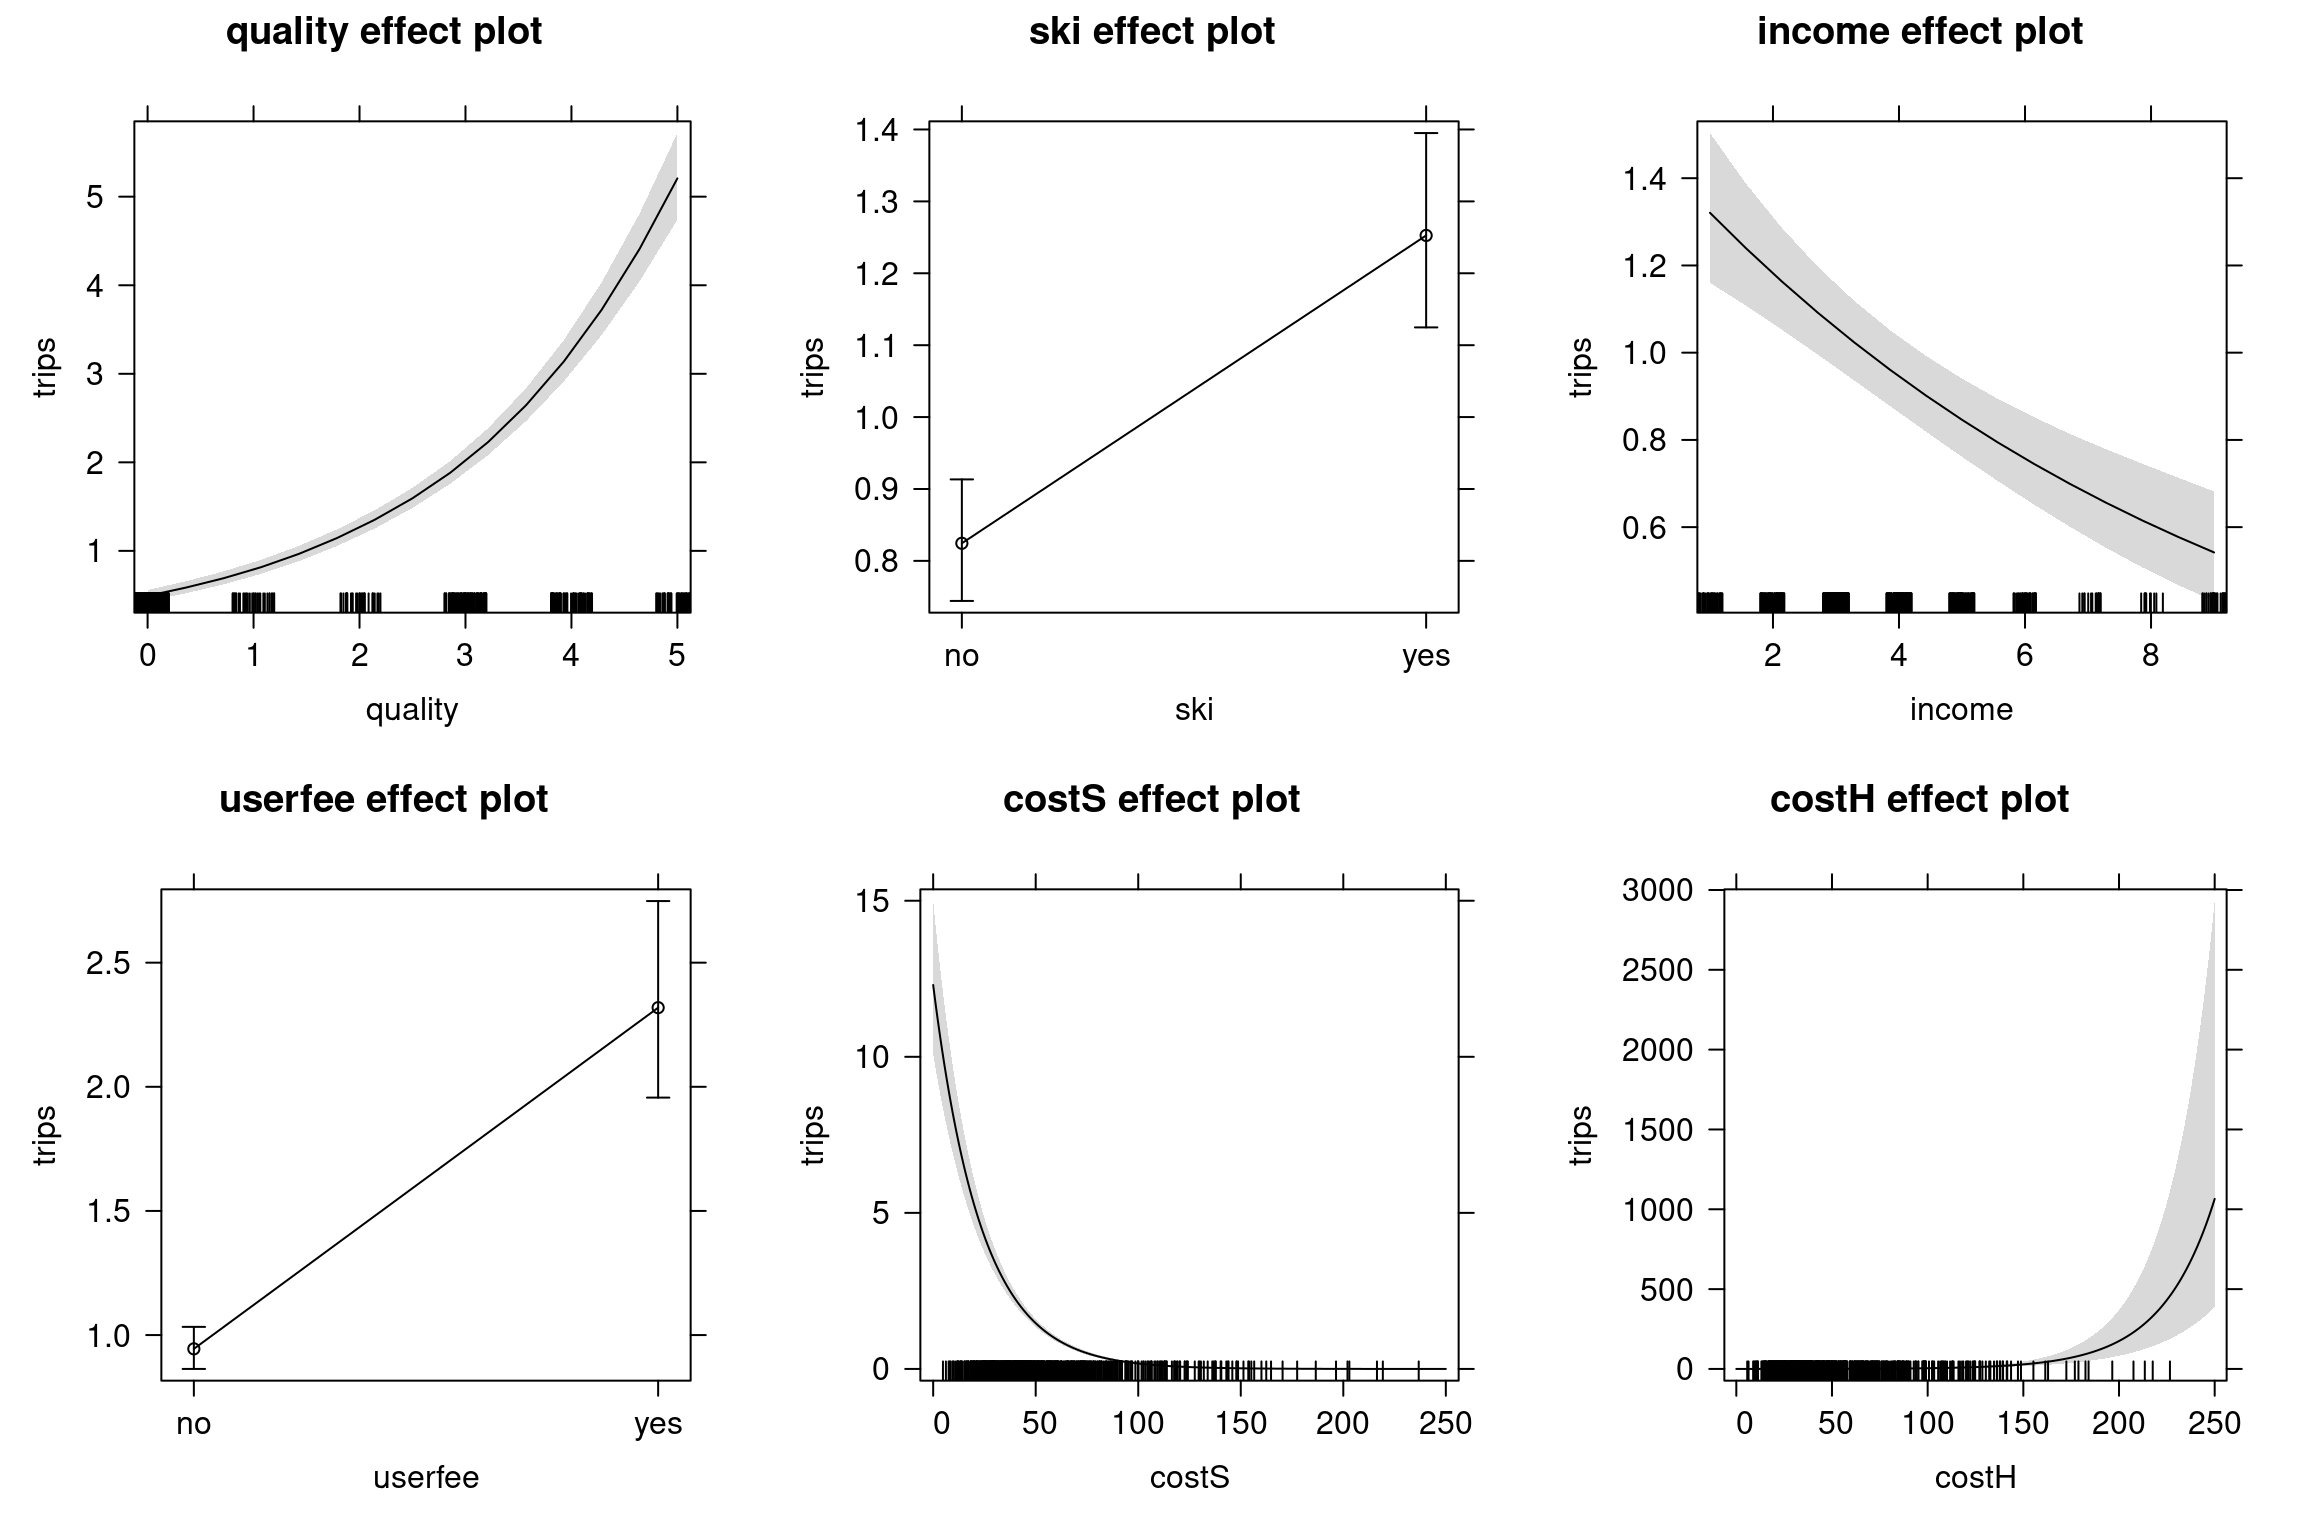 Recreation demand effect plots